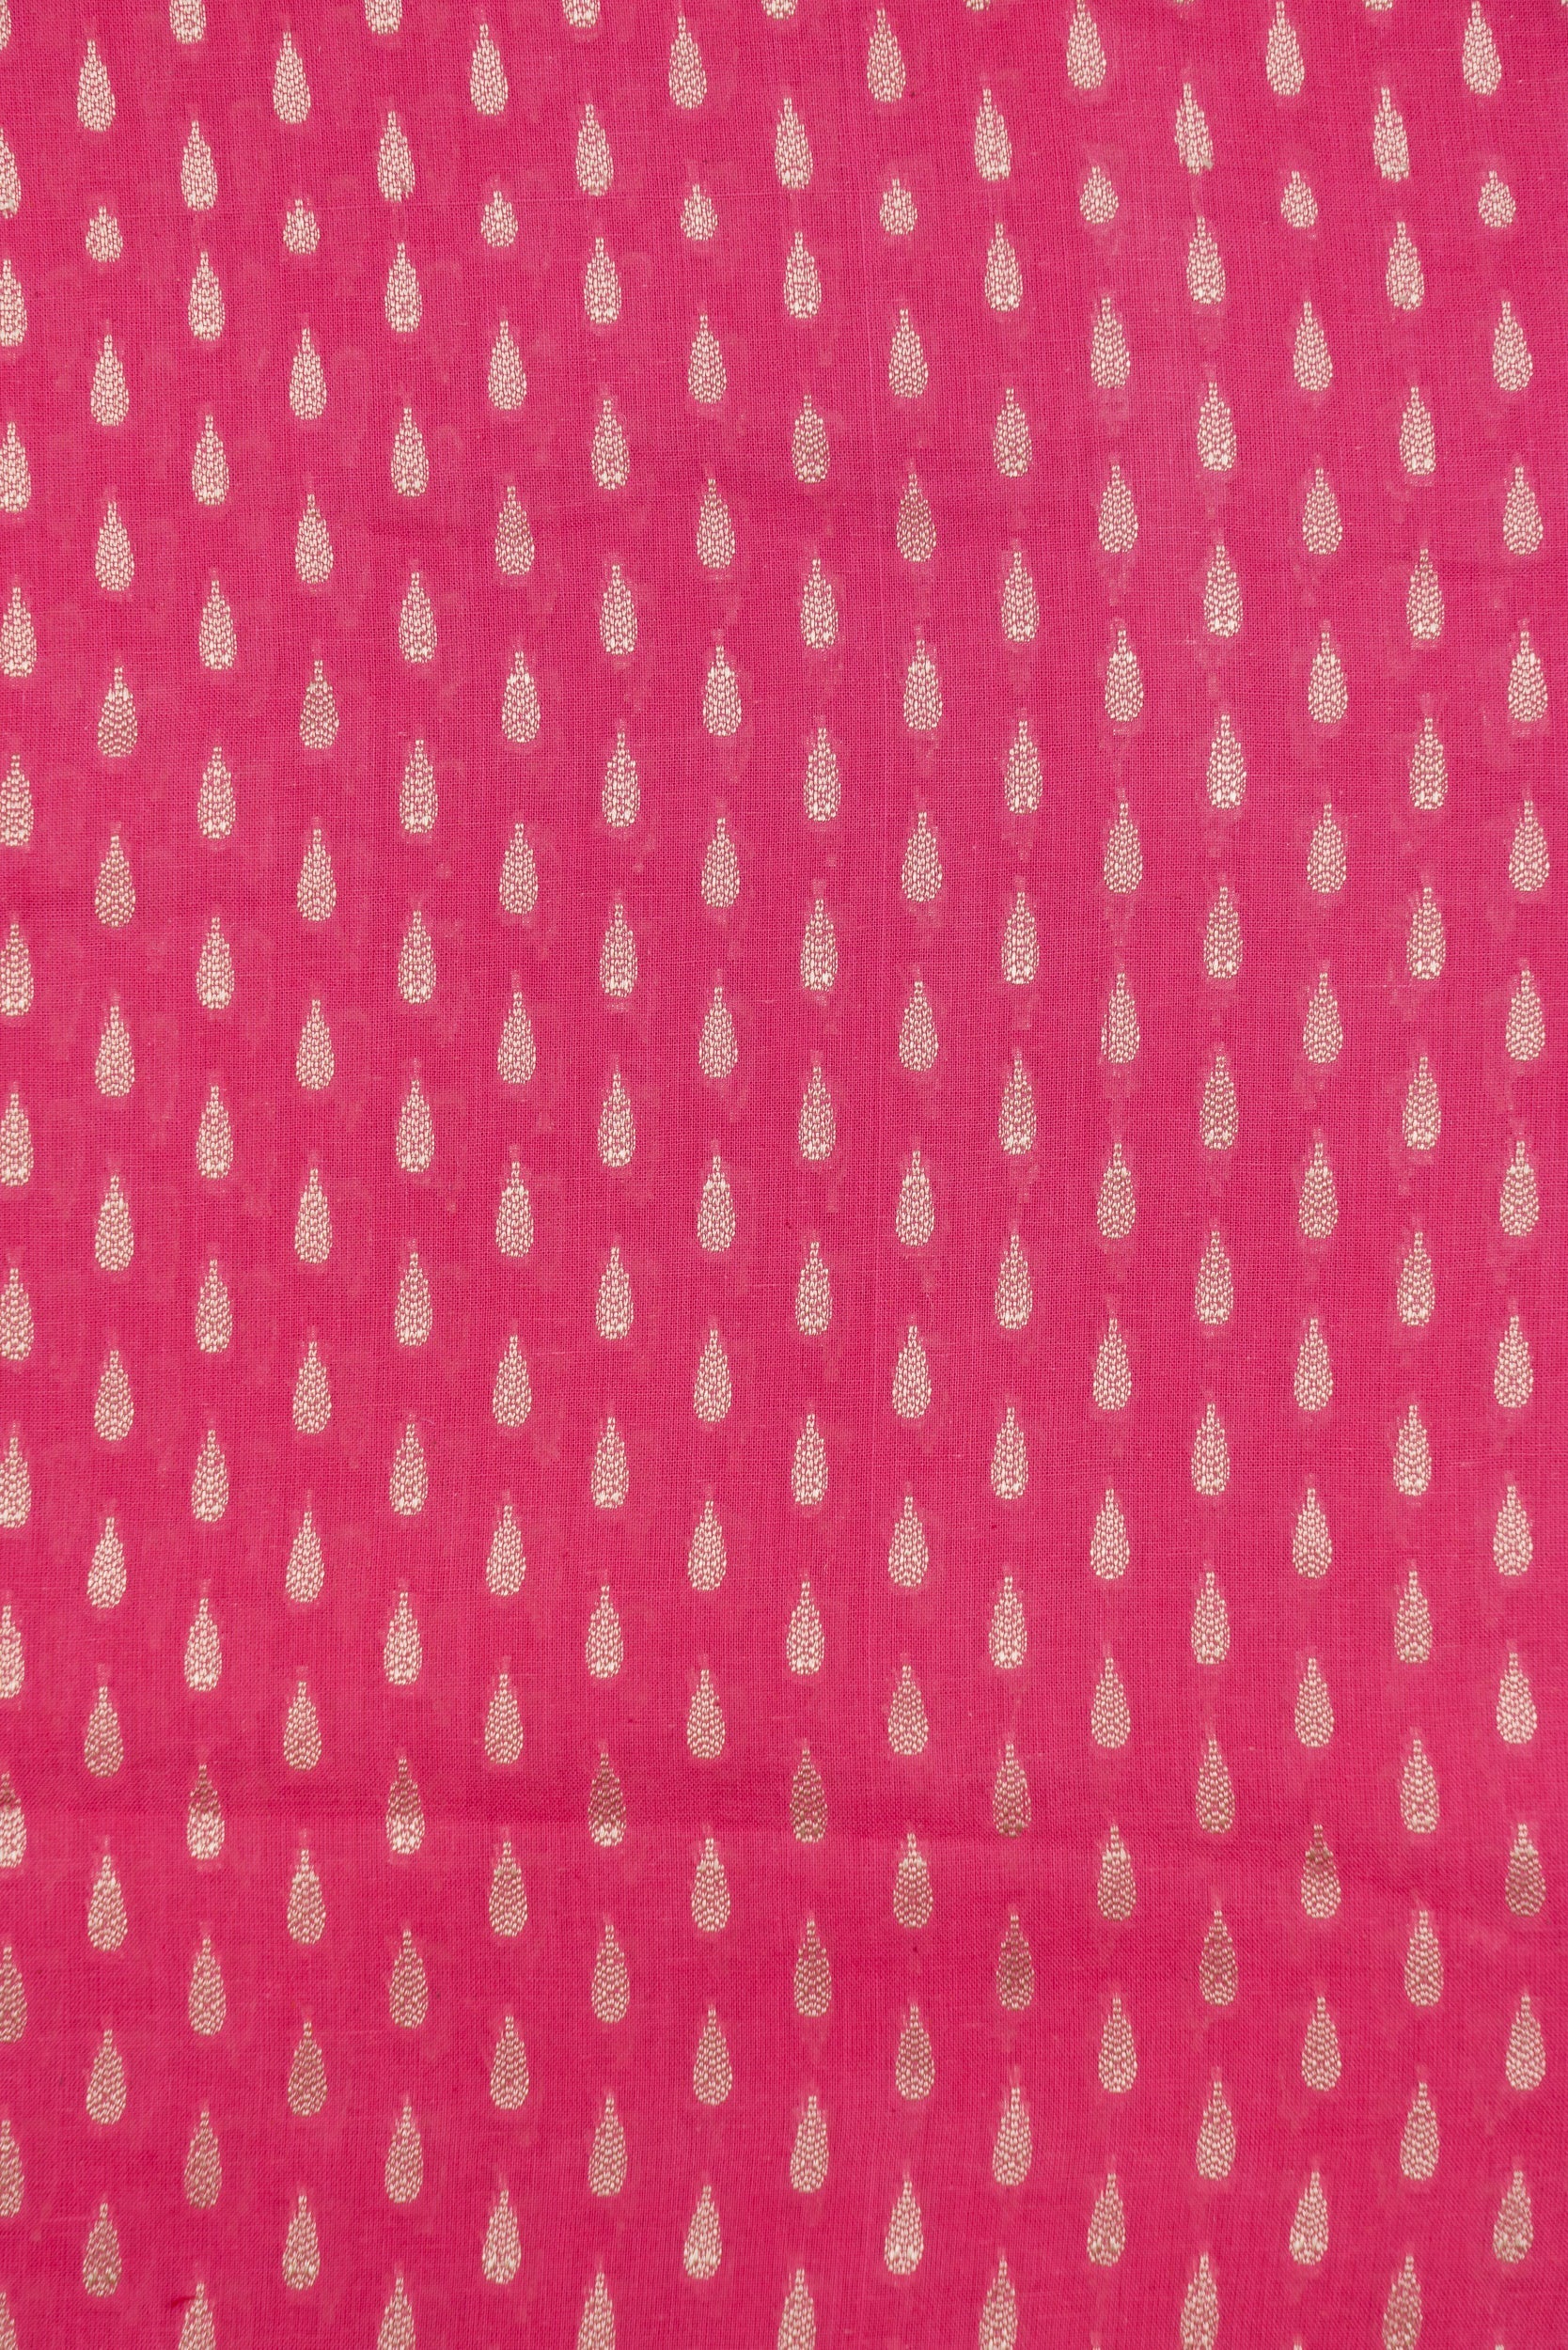 Pre Cut Zari butti Cotton Dyed Fabric (1 Meter)